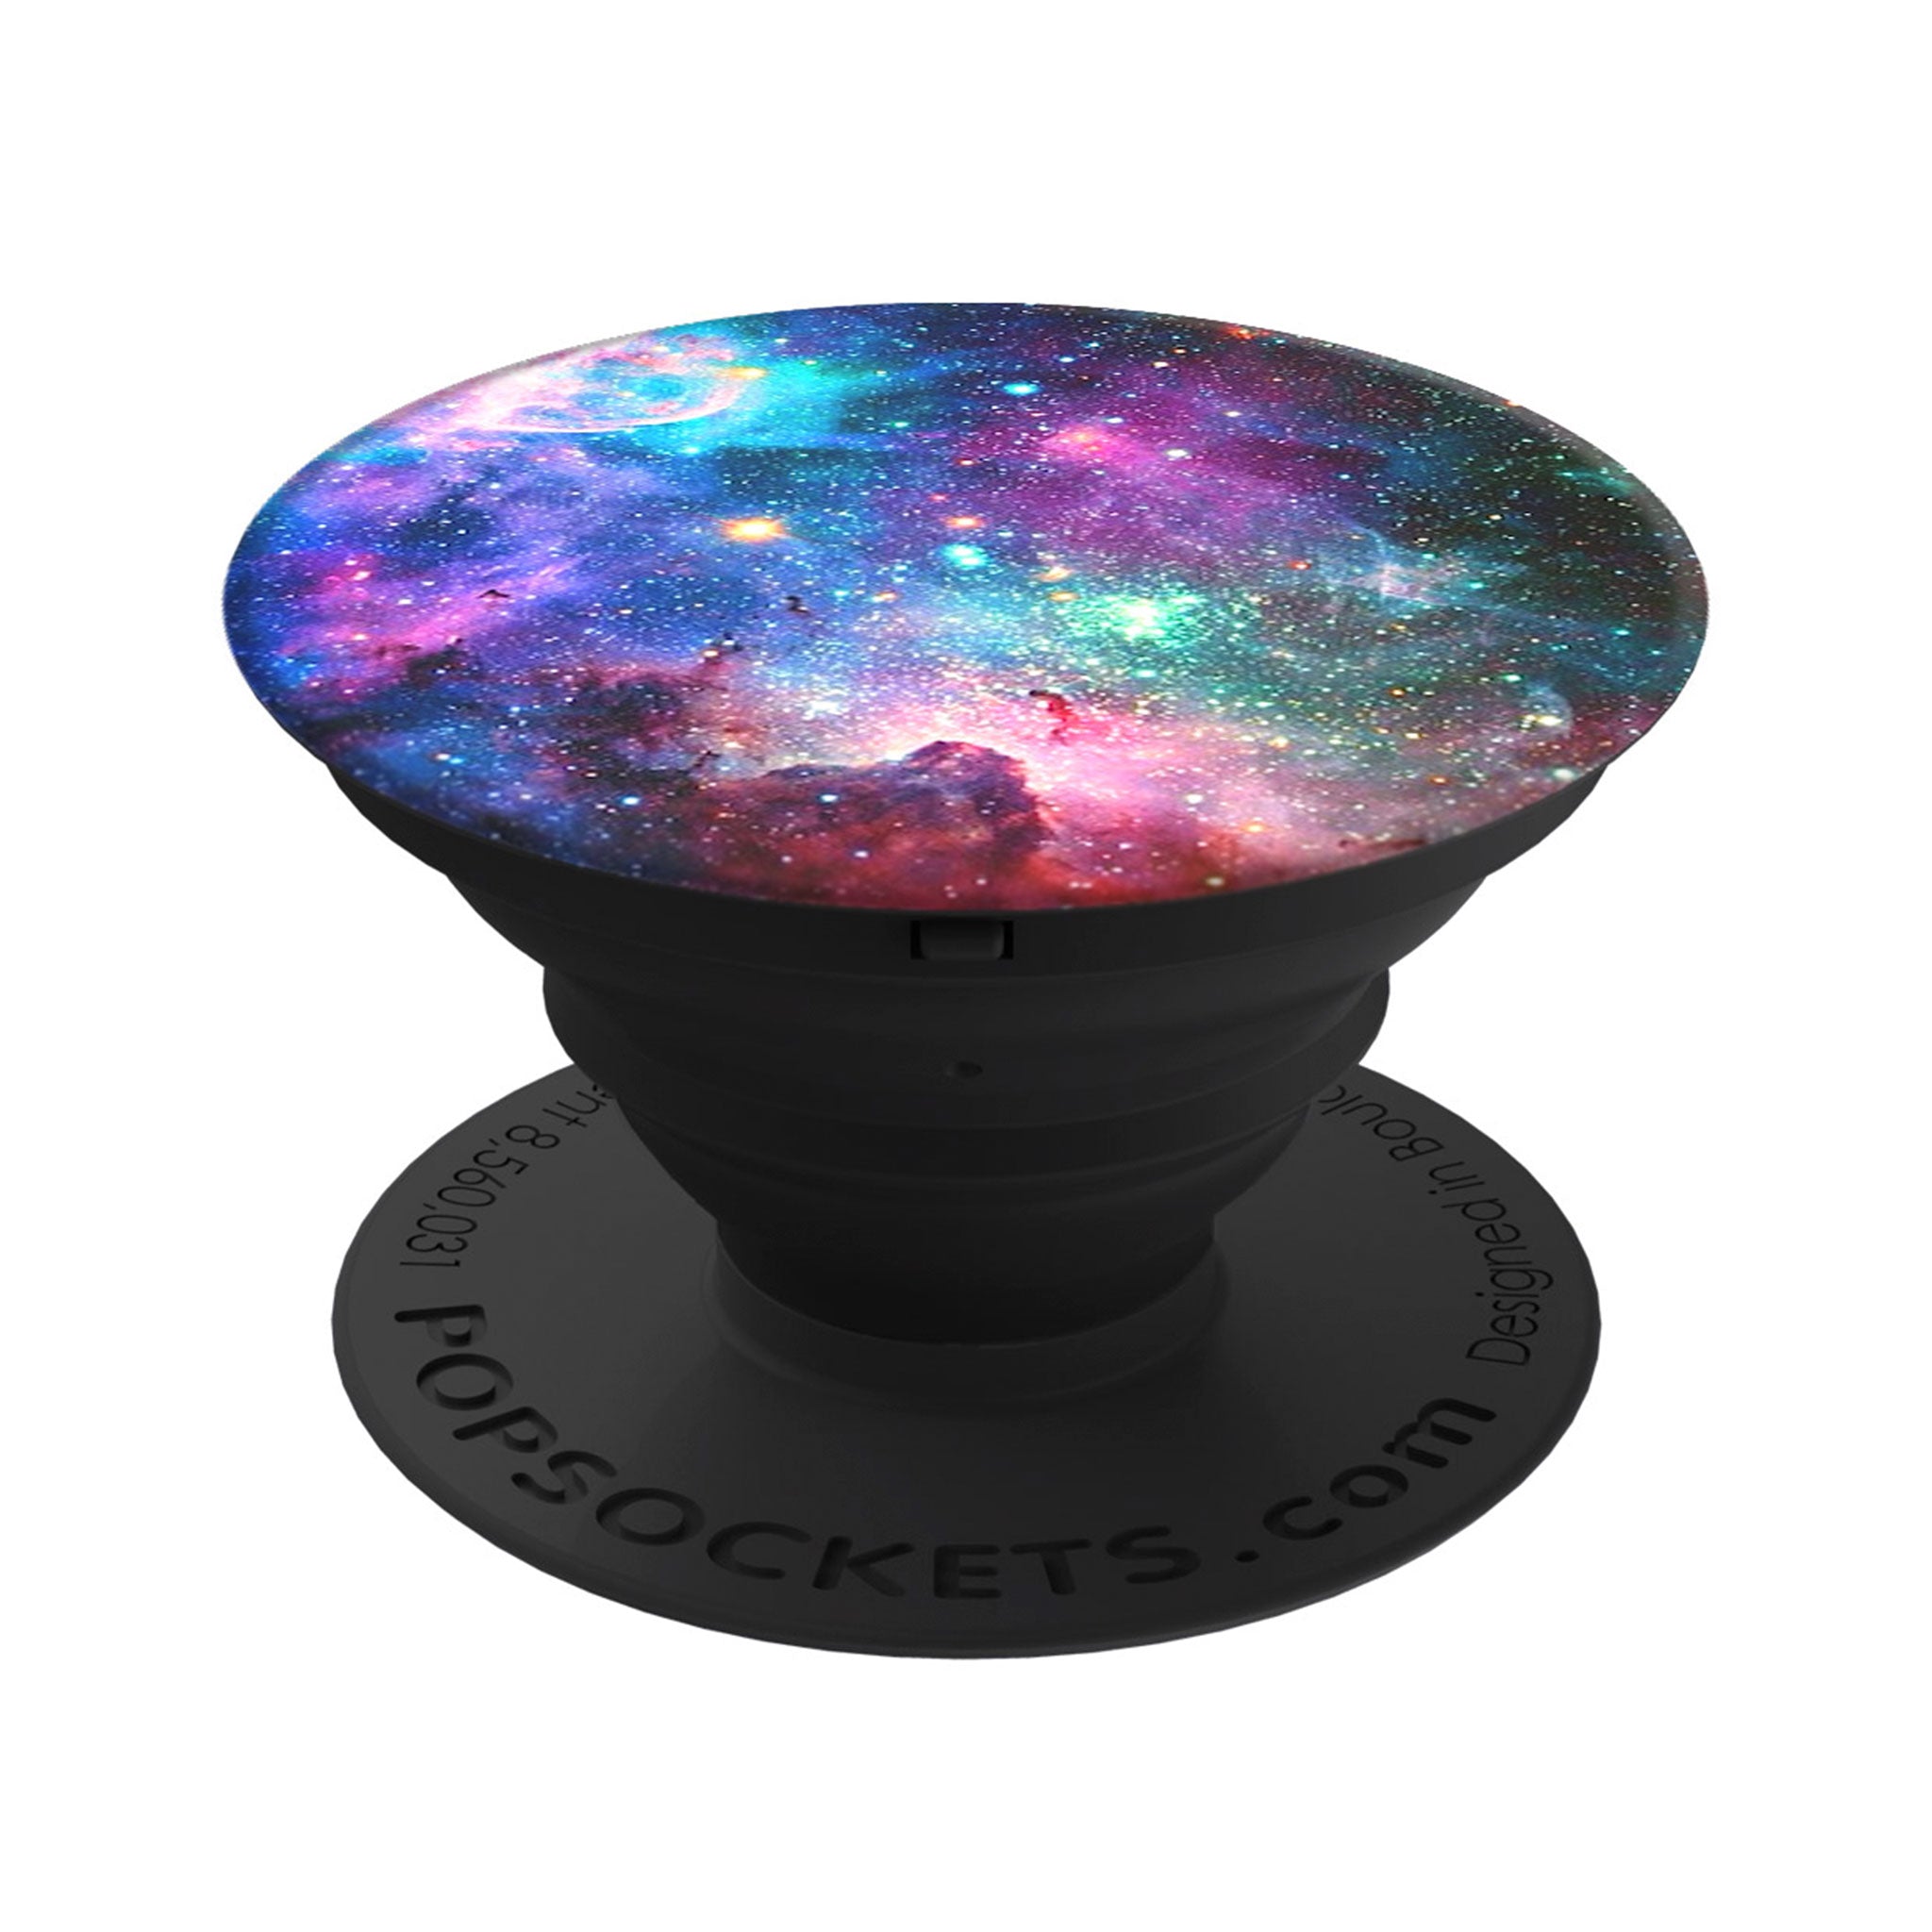 Popsockets - Cosmic Device Stand And Grip - Blue Nebula